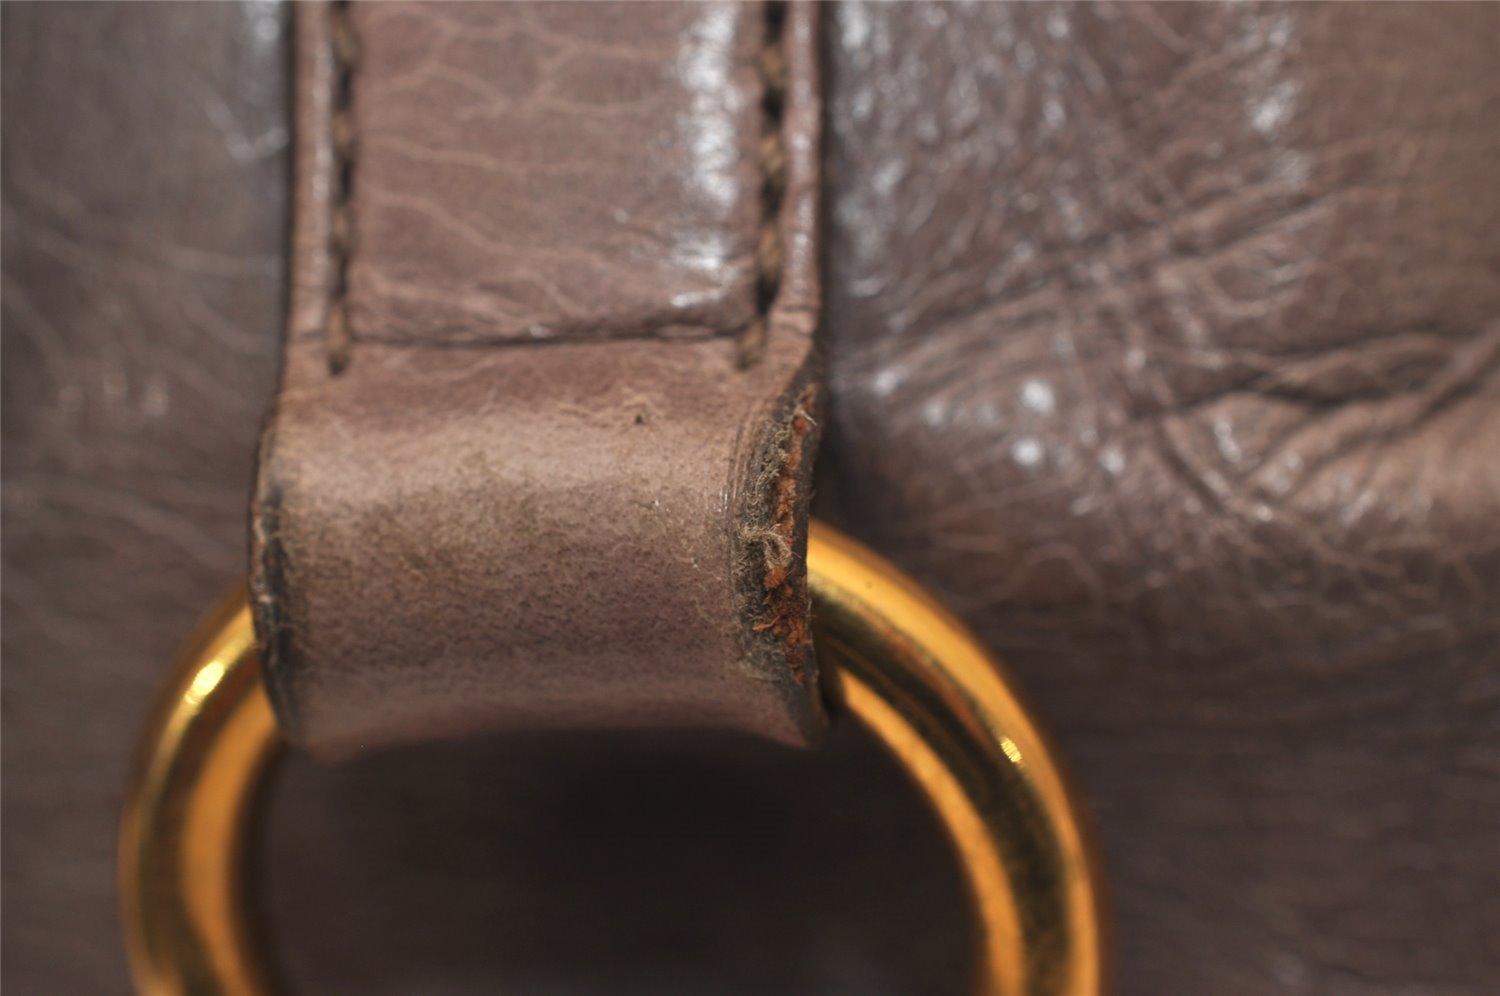 Authentic MIU MIU Vintage Leather 2Way Shoulder Hand Bag Purse RT0438 Gray 8122J